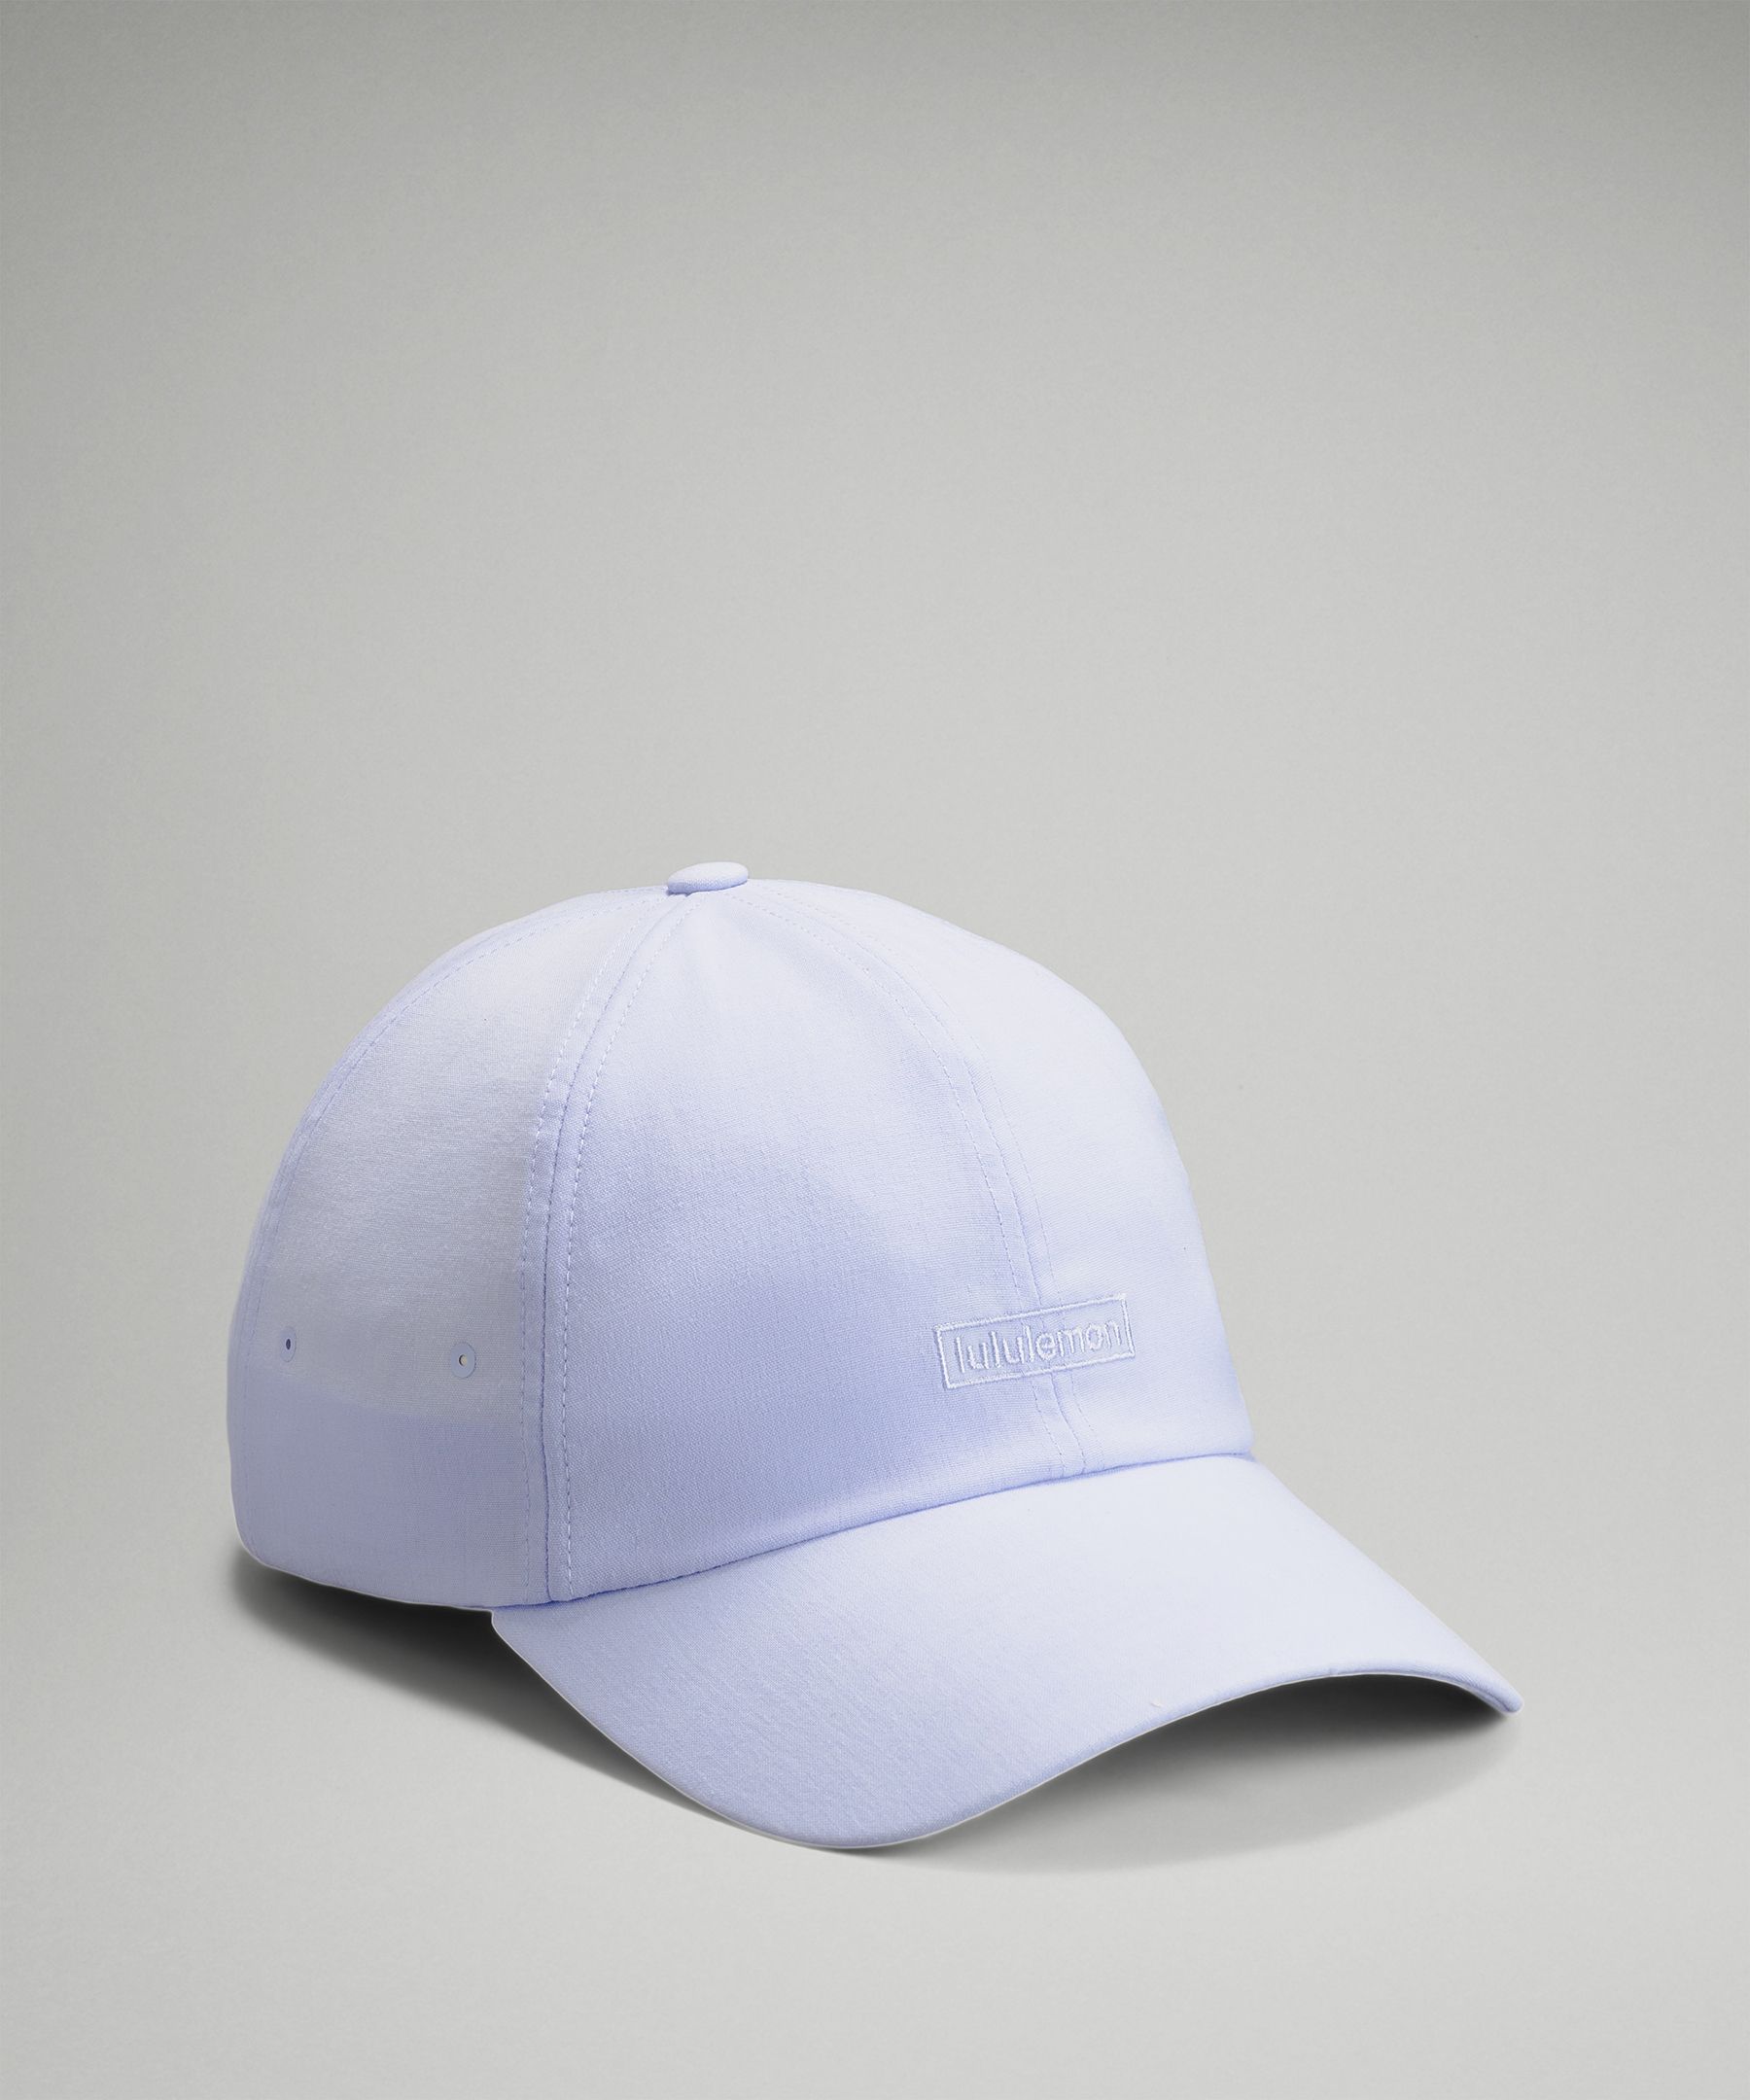 Lululemon Baller Hat Soft Embroidery In Pastel Blue